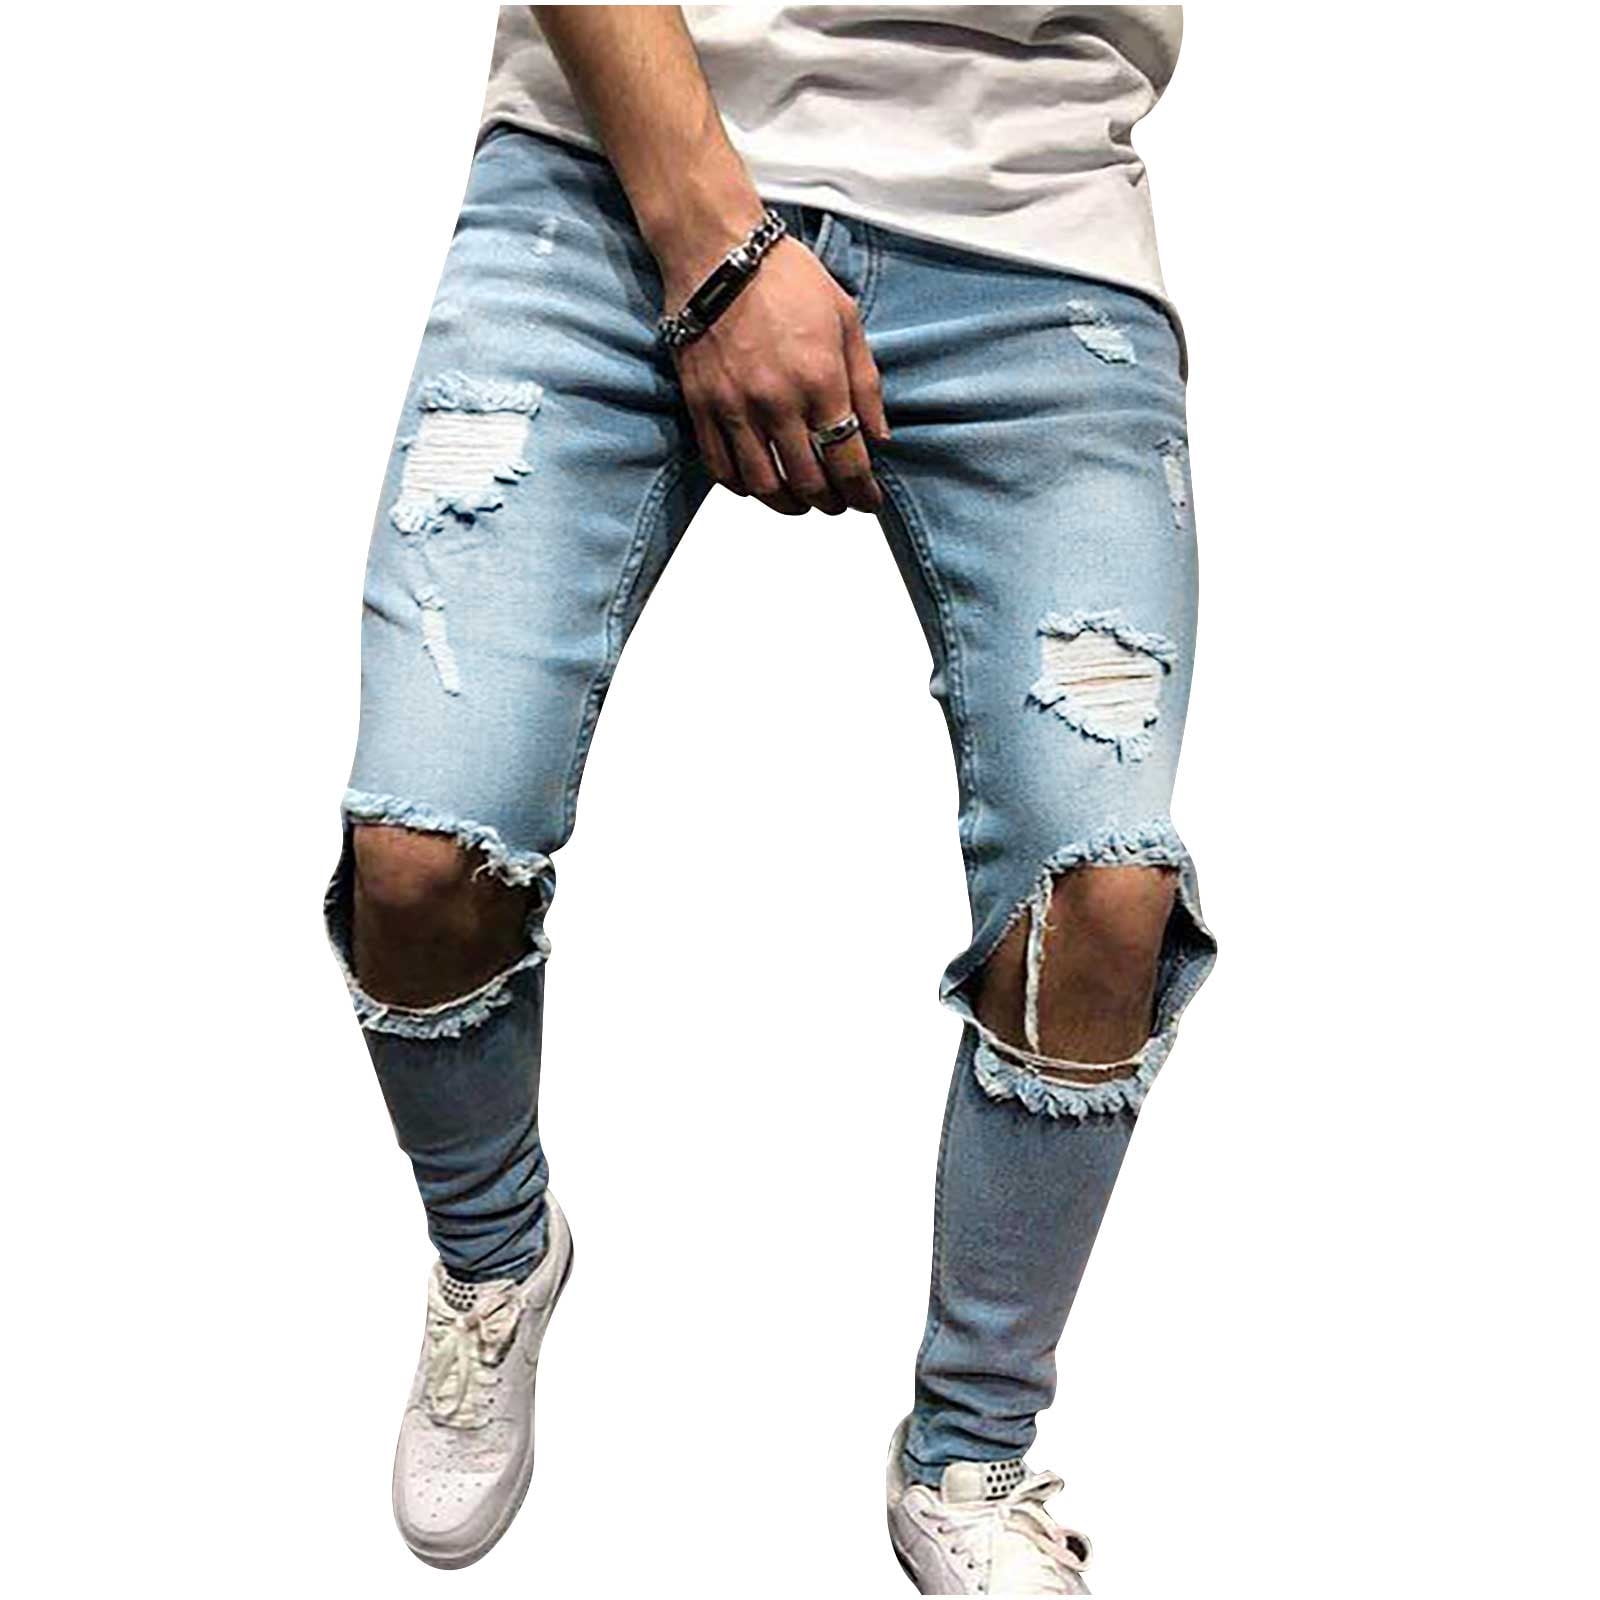 Buy Blue Jeans for Men by LEVIS Online  Ajiocom